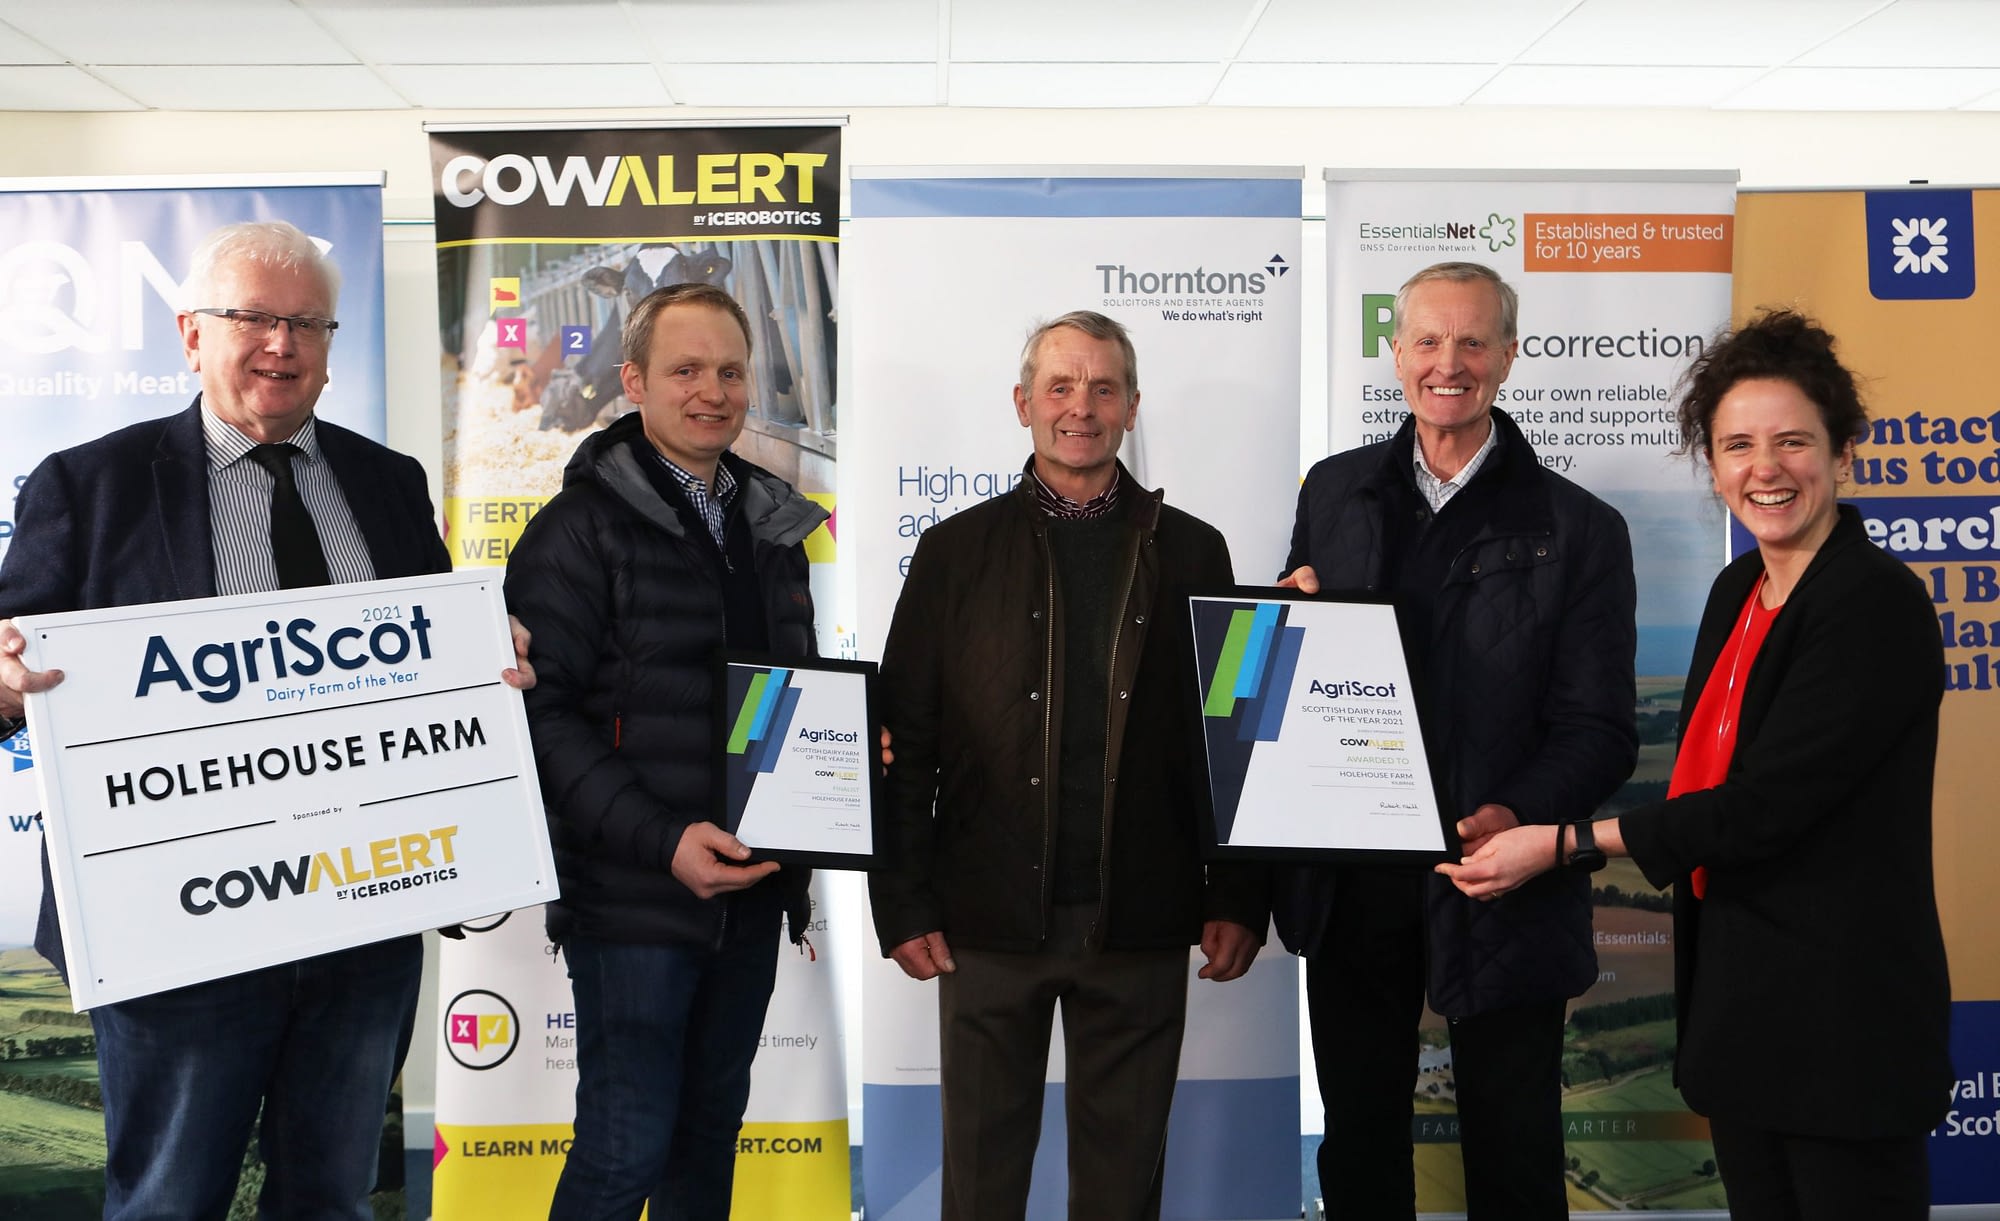 winner of Scttish dairy farm of the year award is Holehouse Farm